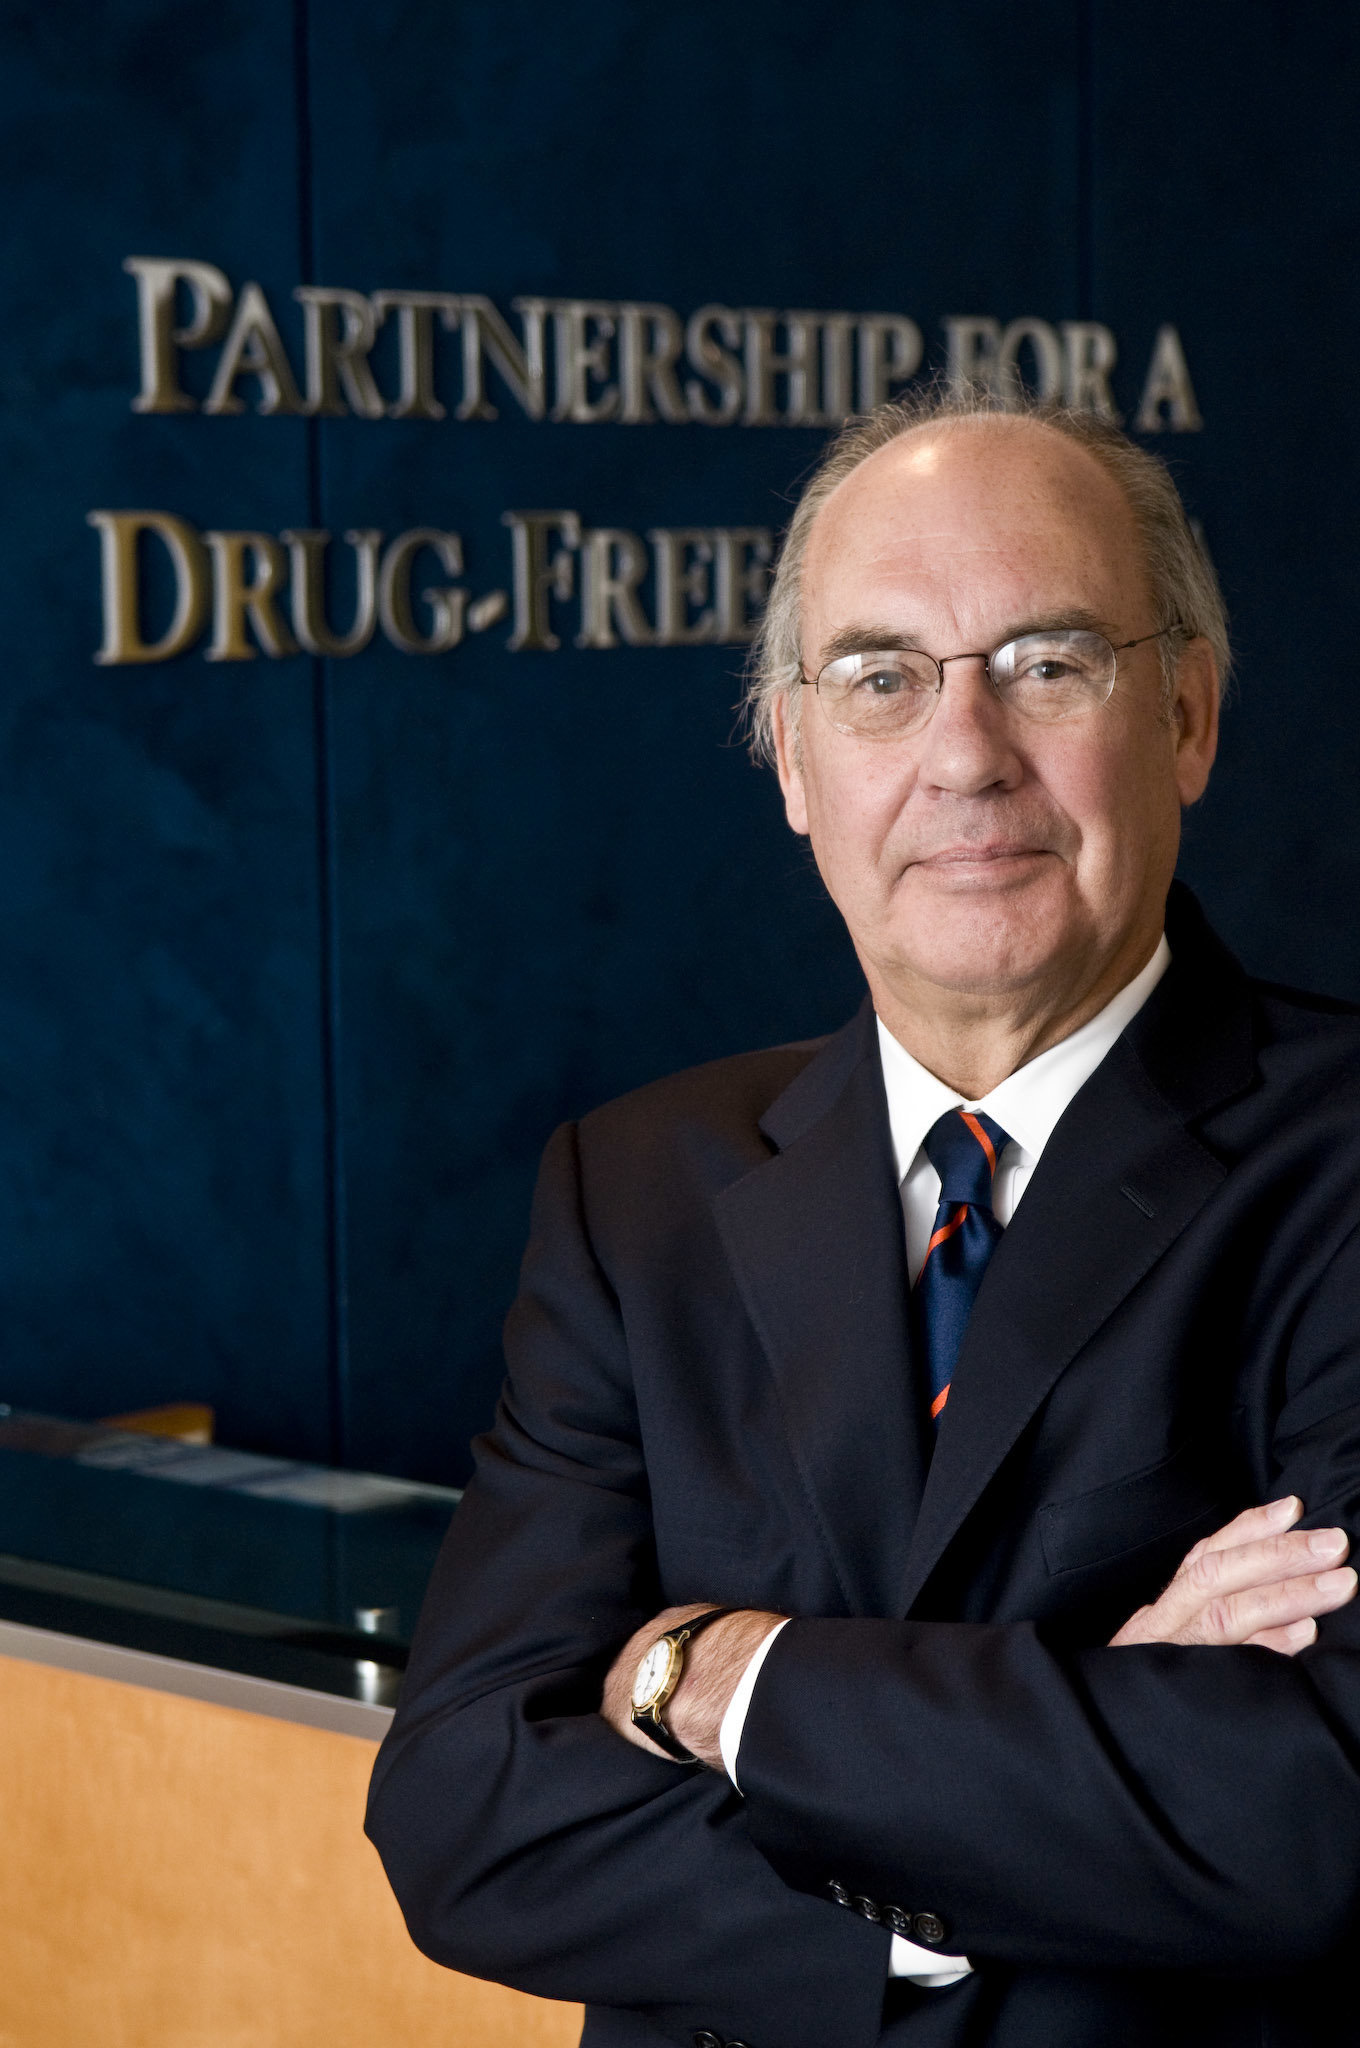 Partnership for a Drug Free America